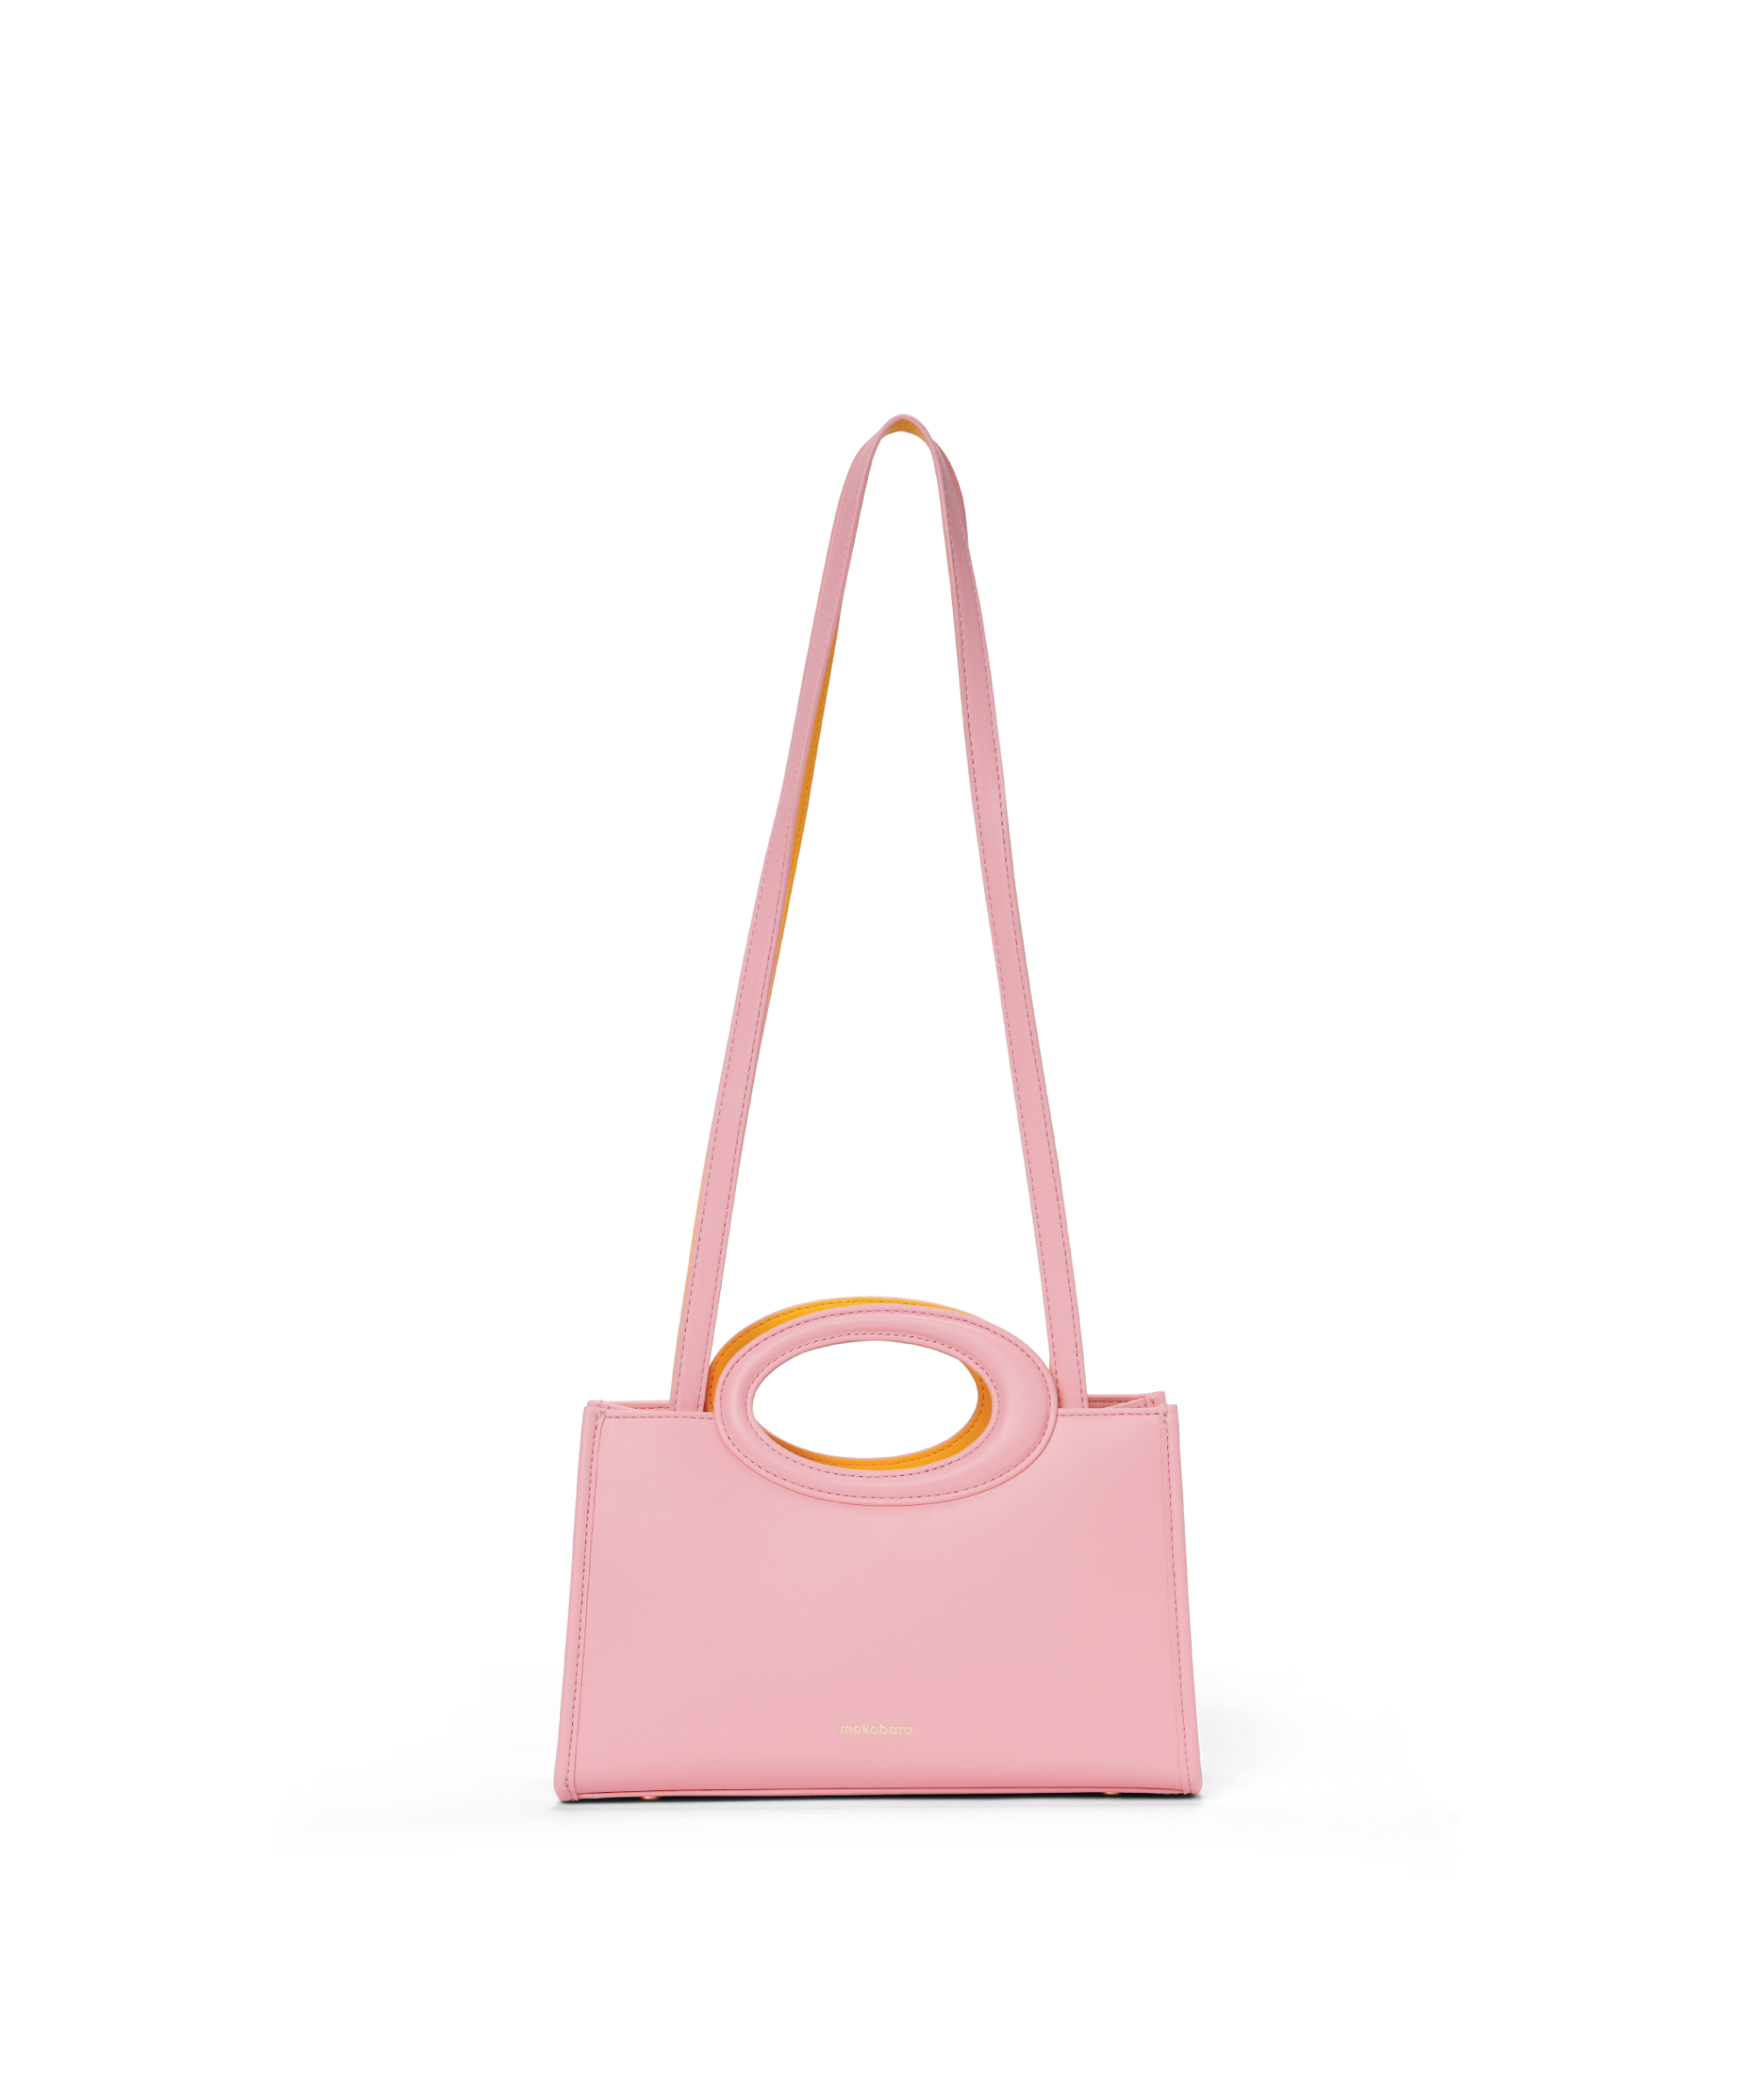 Handbags with Interchangable Straps – Strappy Go Lucky